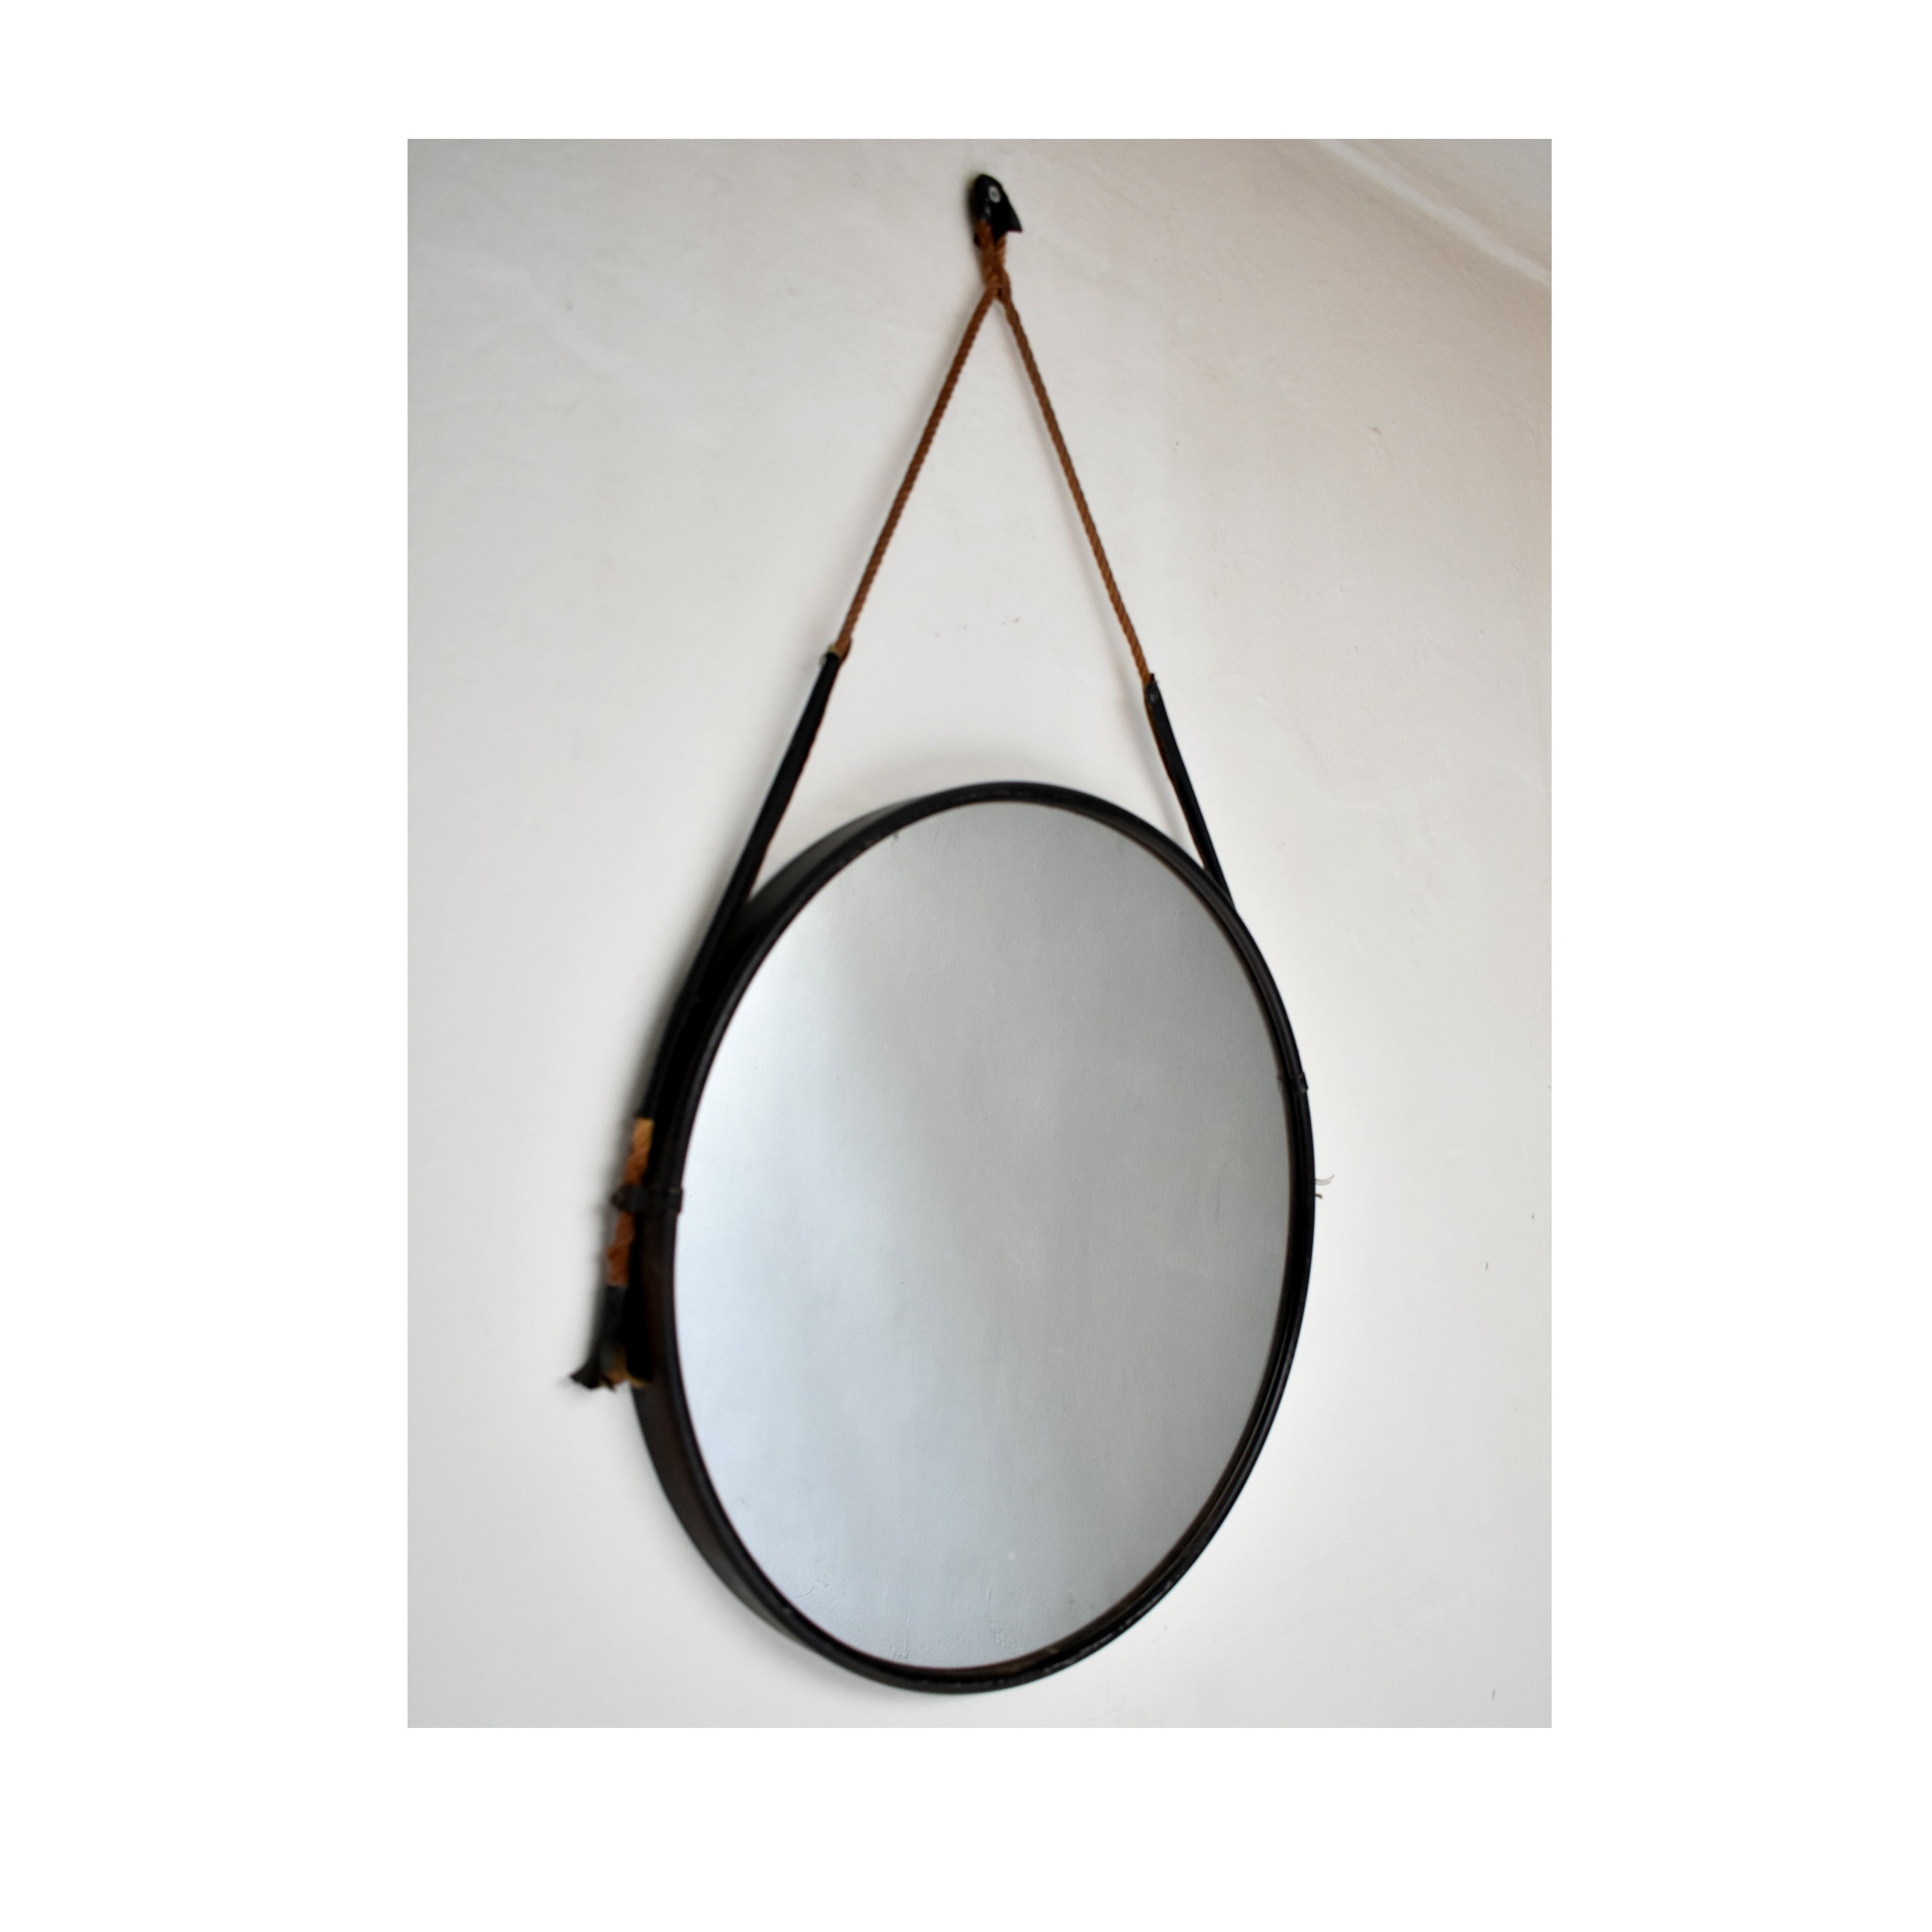  Mid-Century Modern Italian Round Wall Mirrors, 1960s, Black Iron Frame